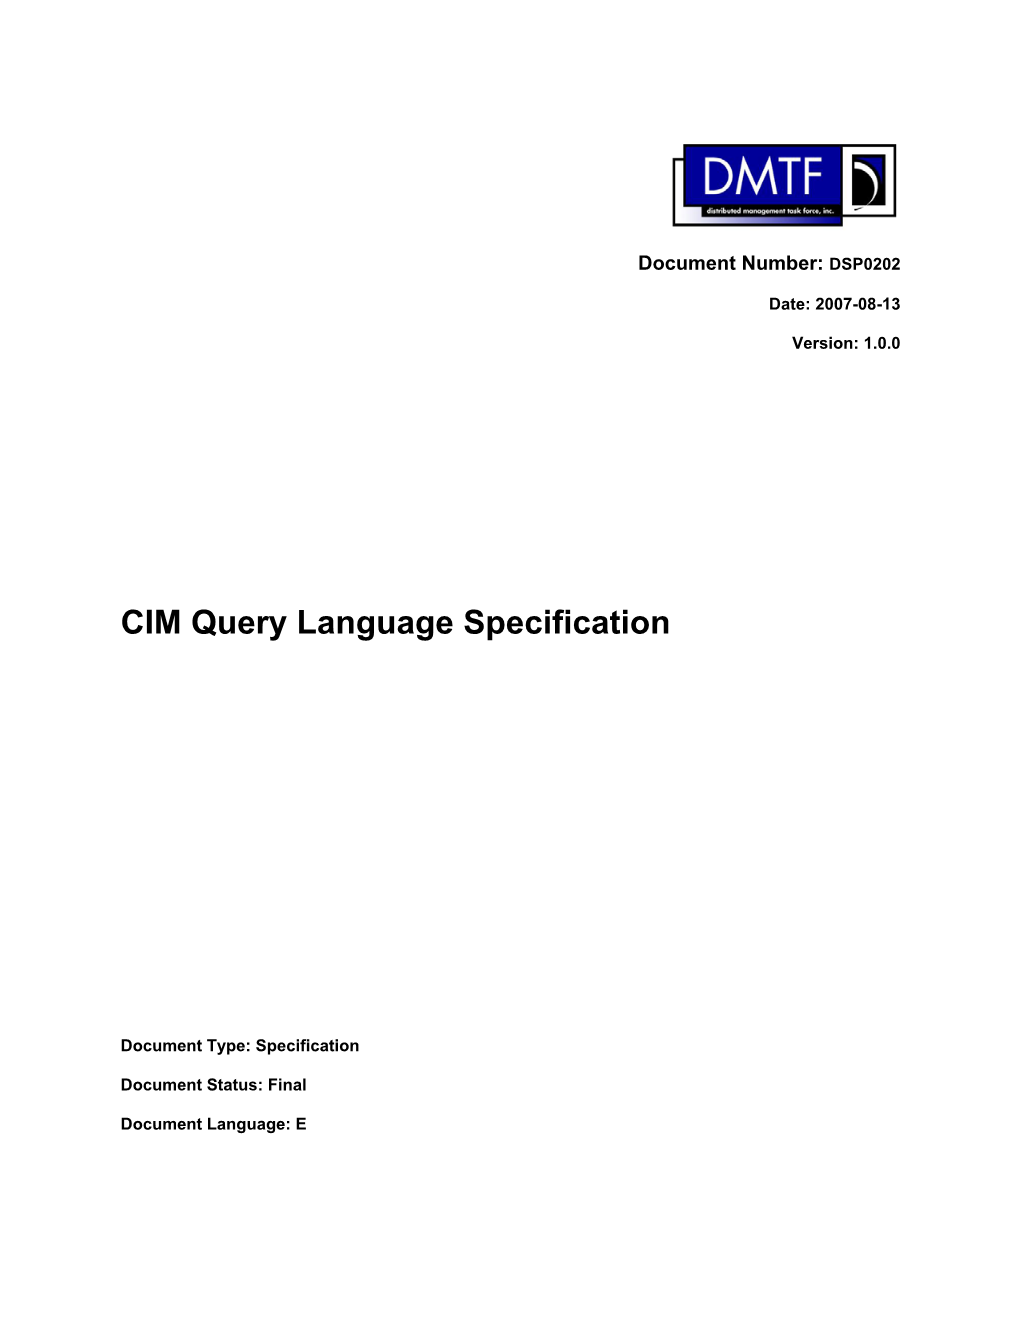 CIM Query Language Specification